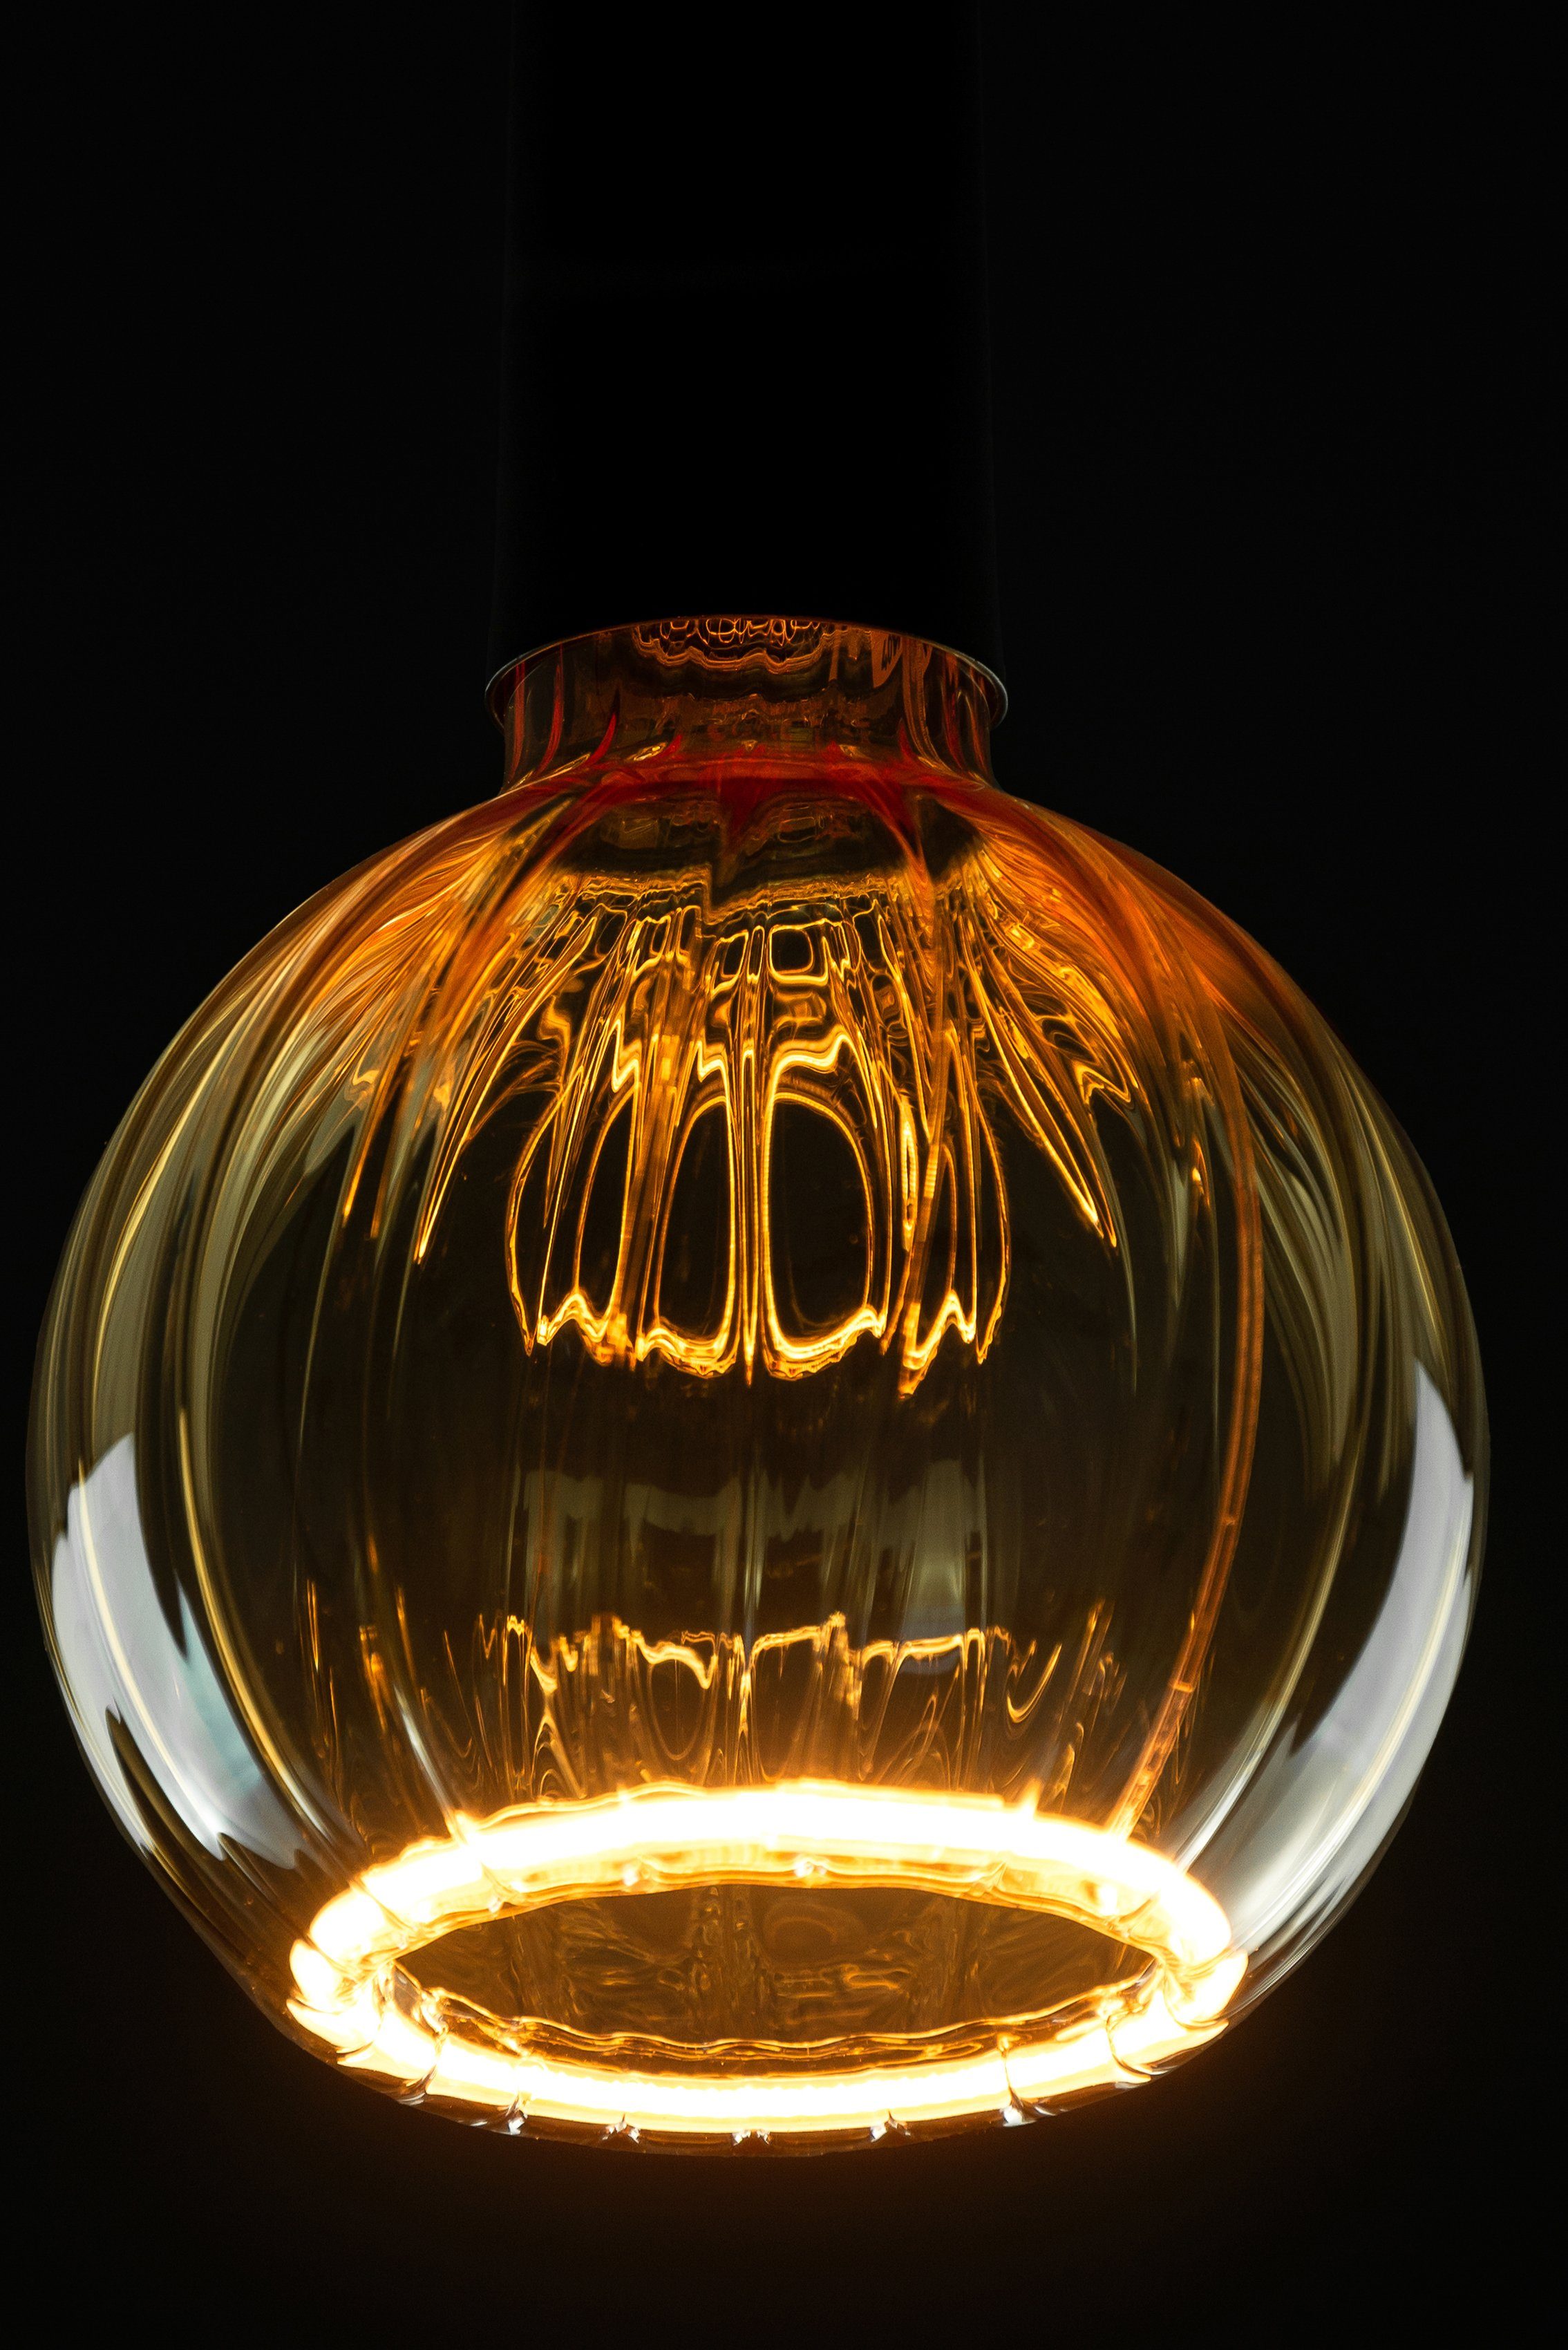 SEGULA E27, straight straight gold, 125 gold LED-Leuchtmittel Floating dimmbar, Floating LED Warmweiß, Globe Globe E27, 125